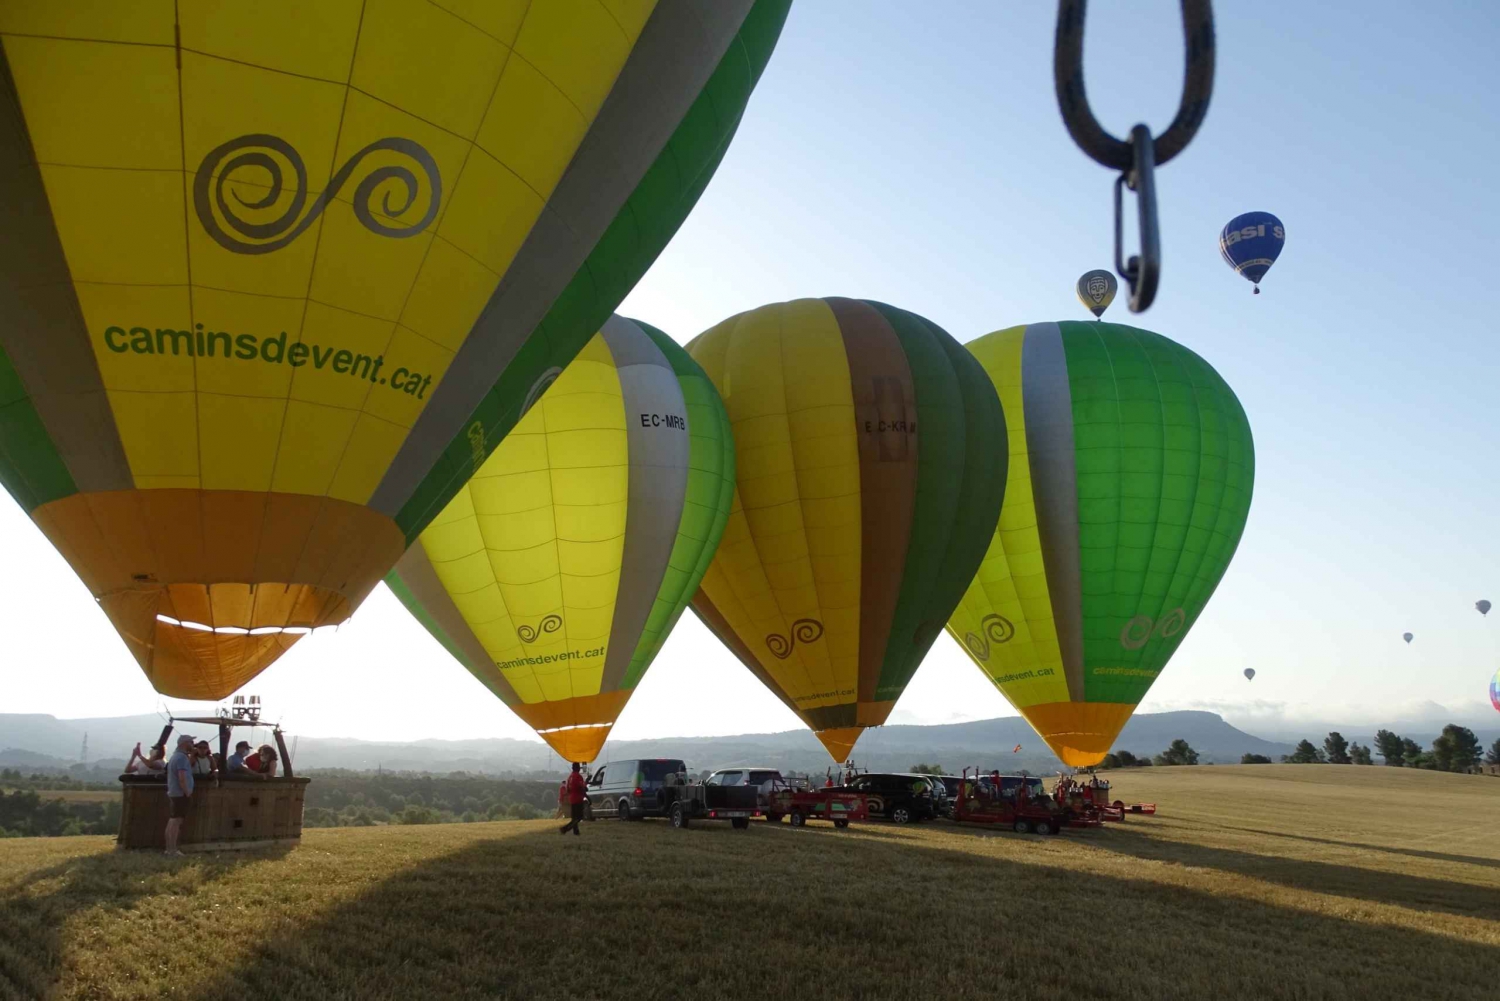 Europäisches Ballonfestival: Fahrt mit dem Heißluftballon